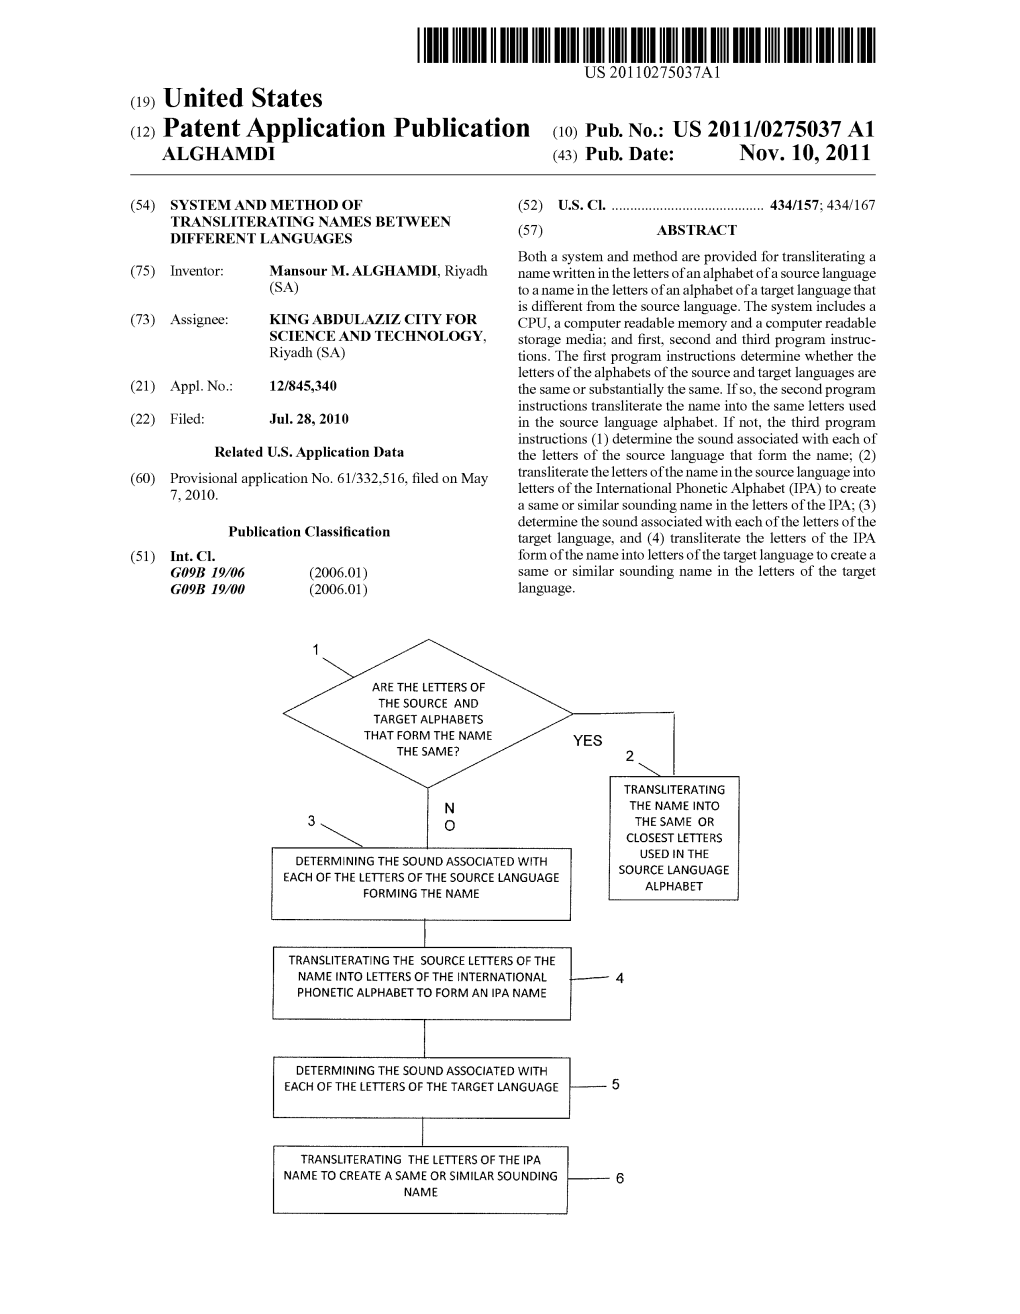 (12) Patent Application Publication (10) Pub. No.: US 2011/0275037 A1 ALGHAMD (43) Pub